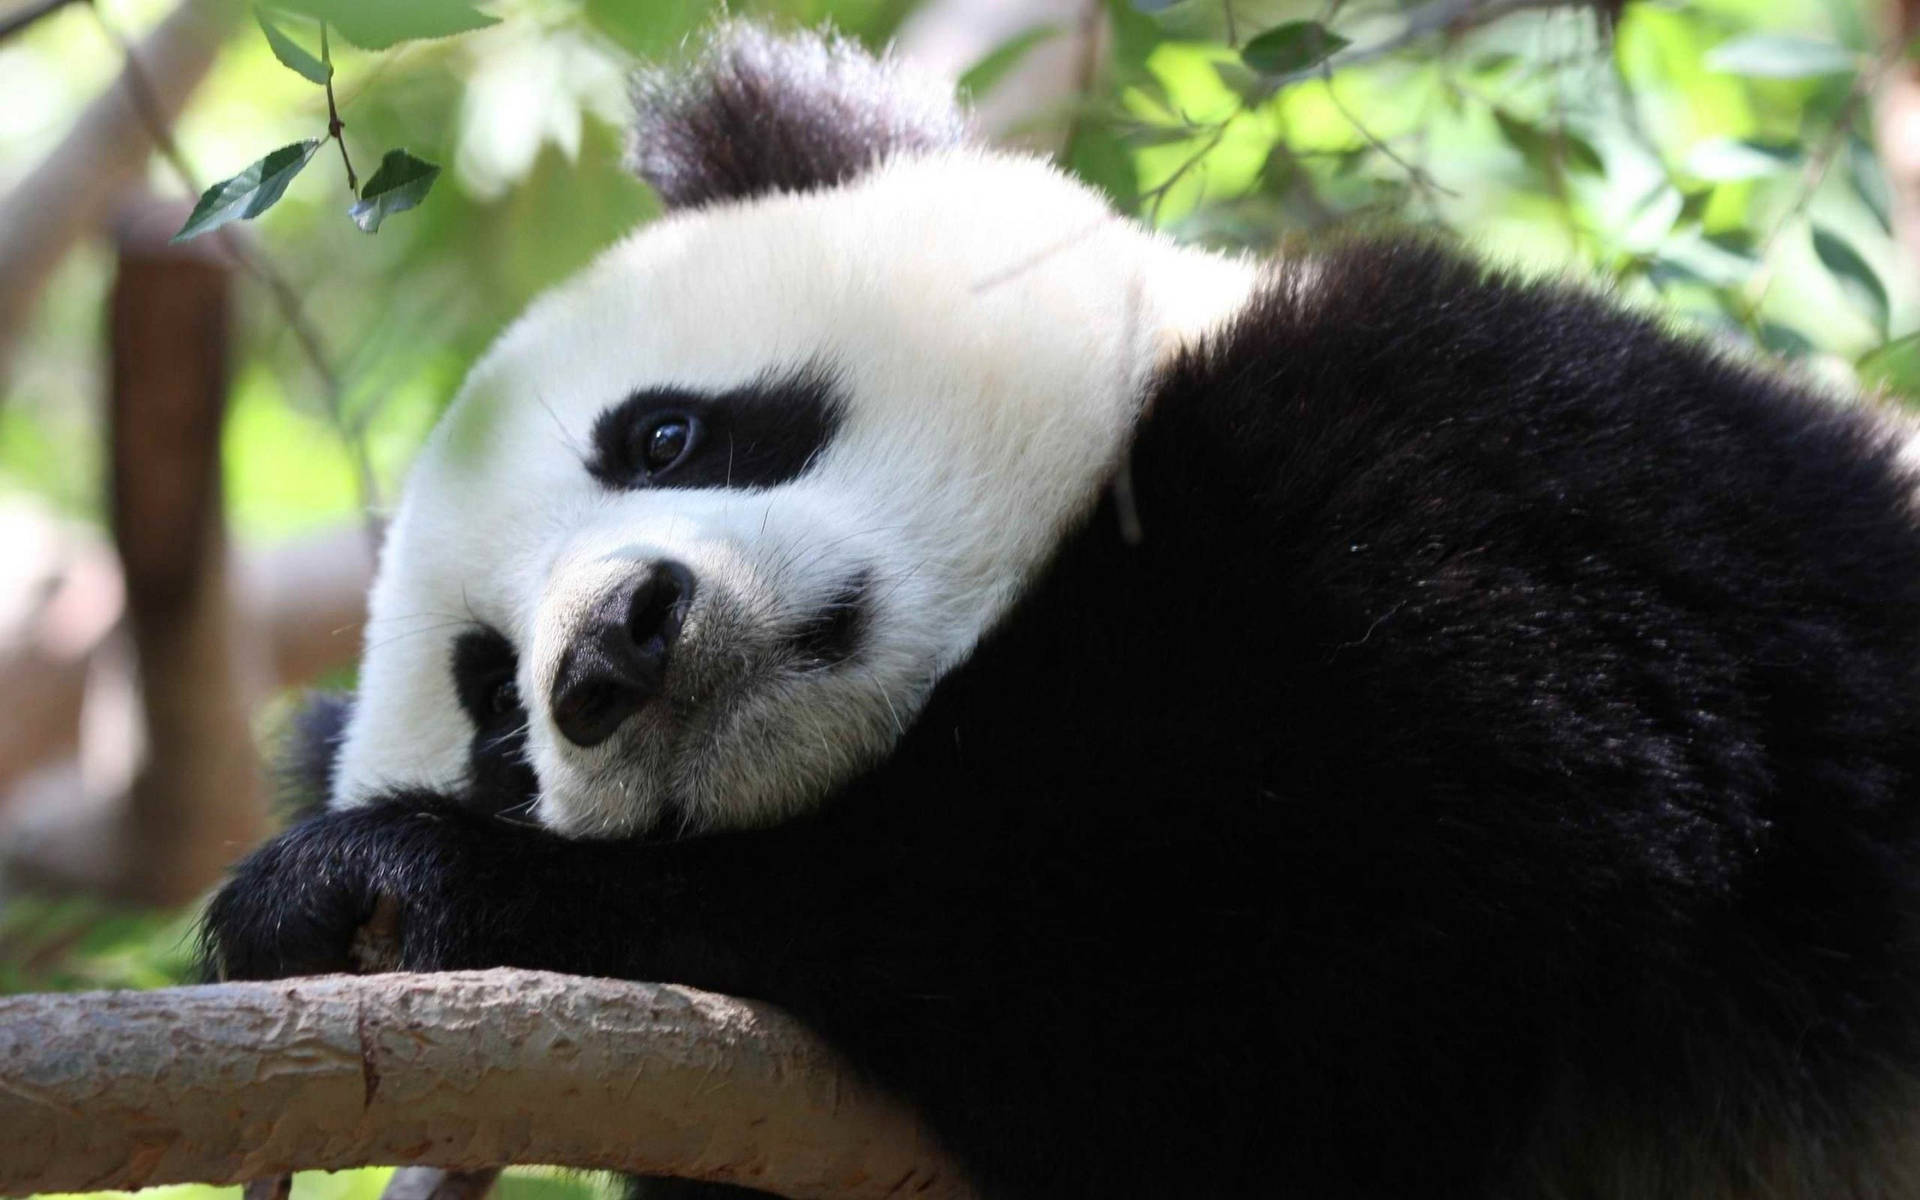 Sad Aesthetic Panda At Tree Branch